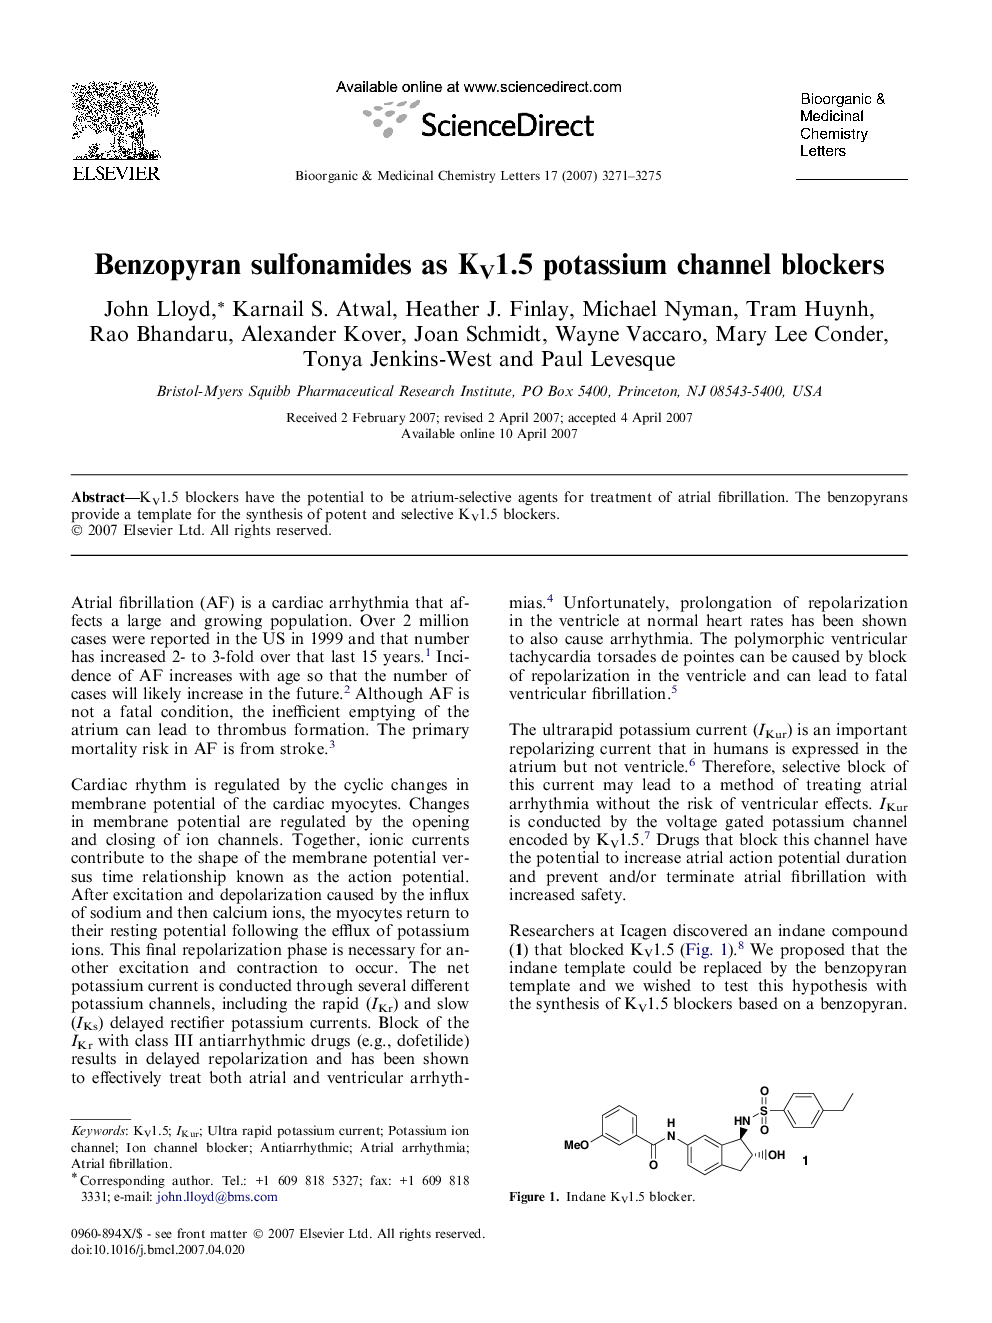 Benzopyran sulfonamides as KV1.5 potassium channel blockers